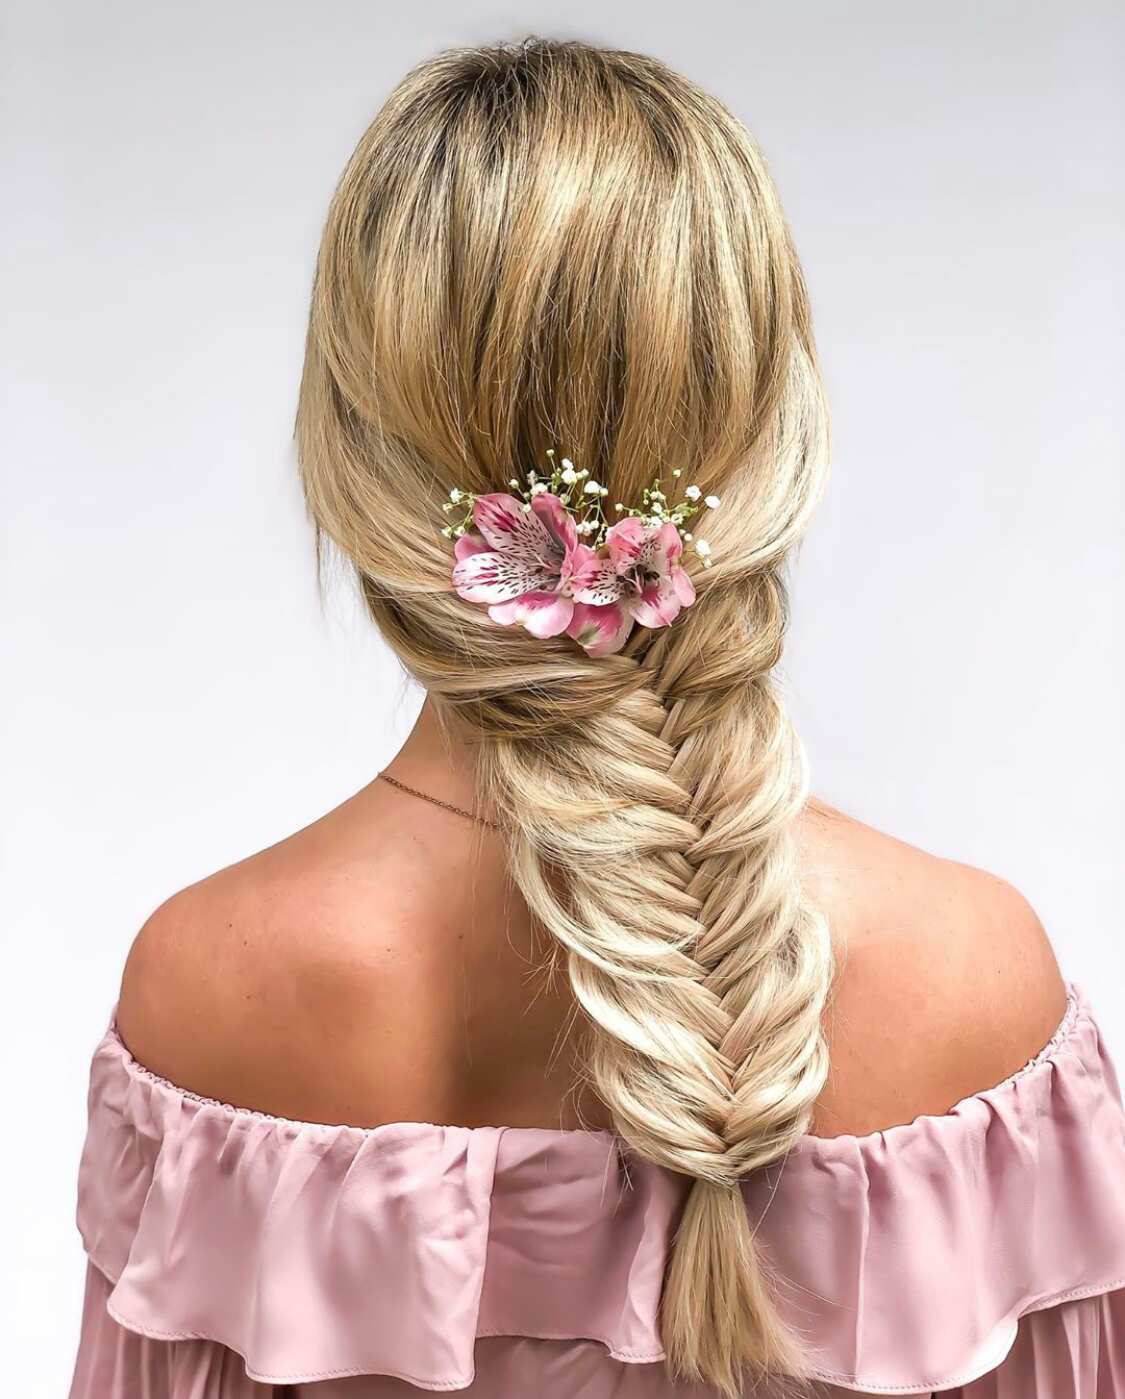 Holly Mae Hair - Fishtail braid for this lovely wedding guest..  #weddinghair #hair #fishtail #fishtailbraid #hairup #babingtonhouse # hairstyles #longhair #hairstylist | Facebook